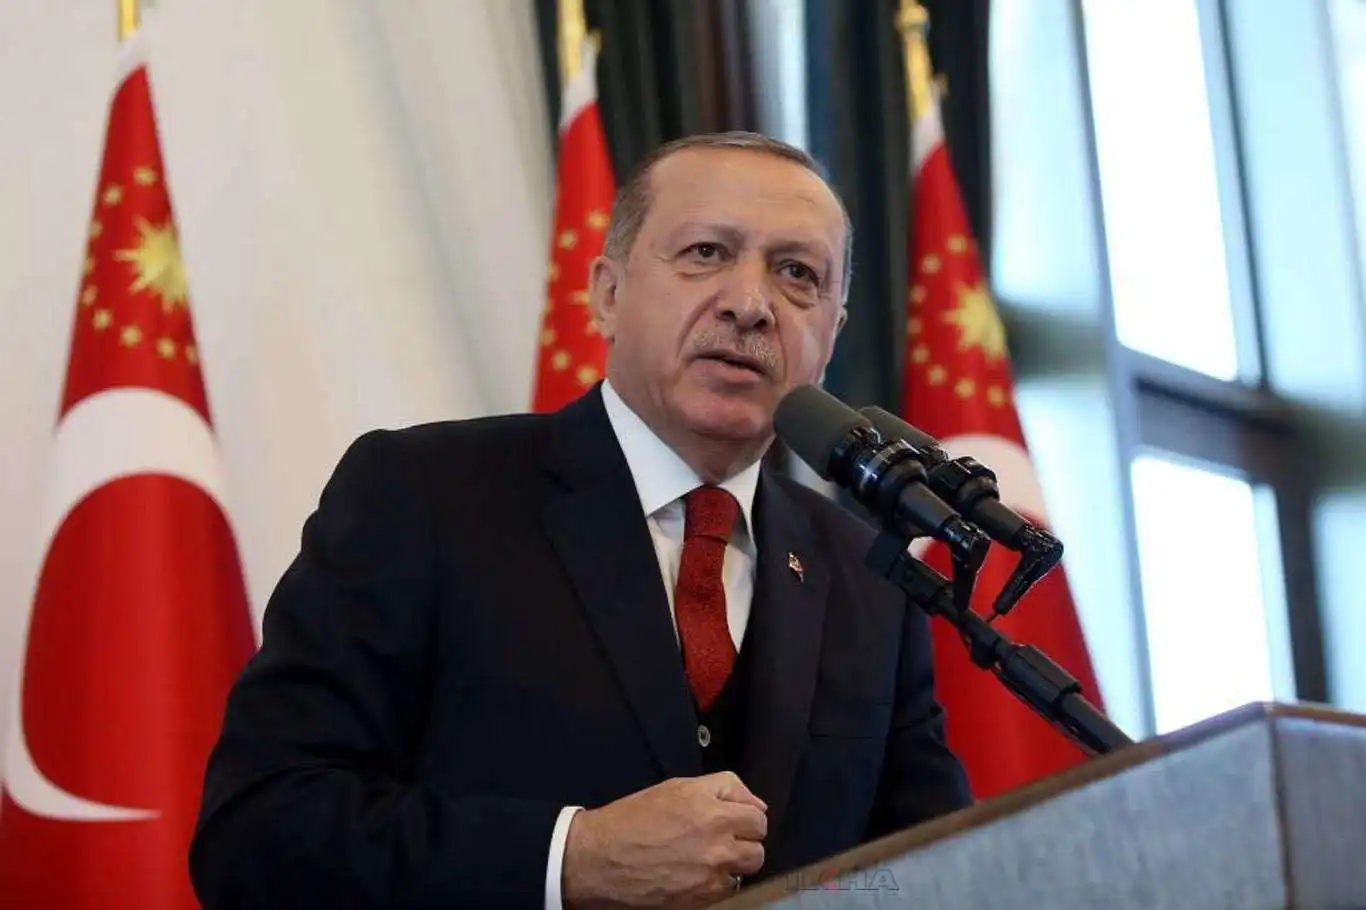 Erdoğan calls for unity and solidarity in Eid al-Adha message